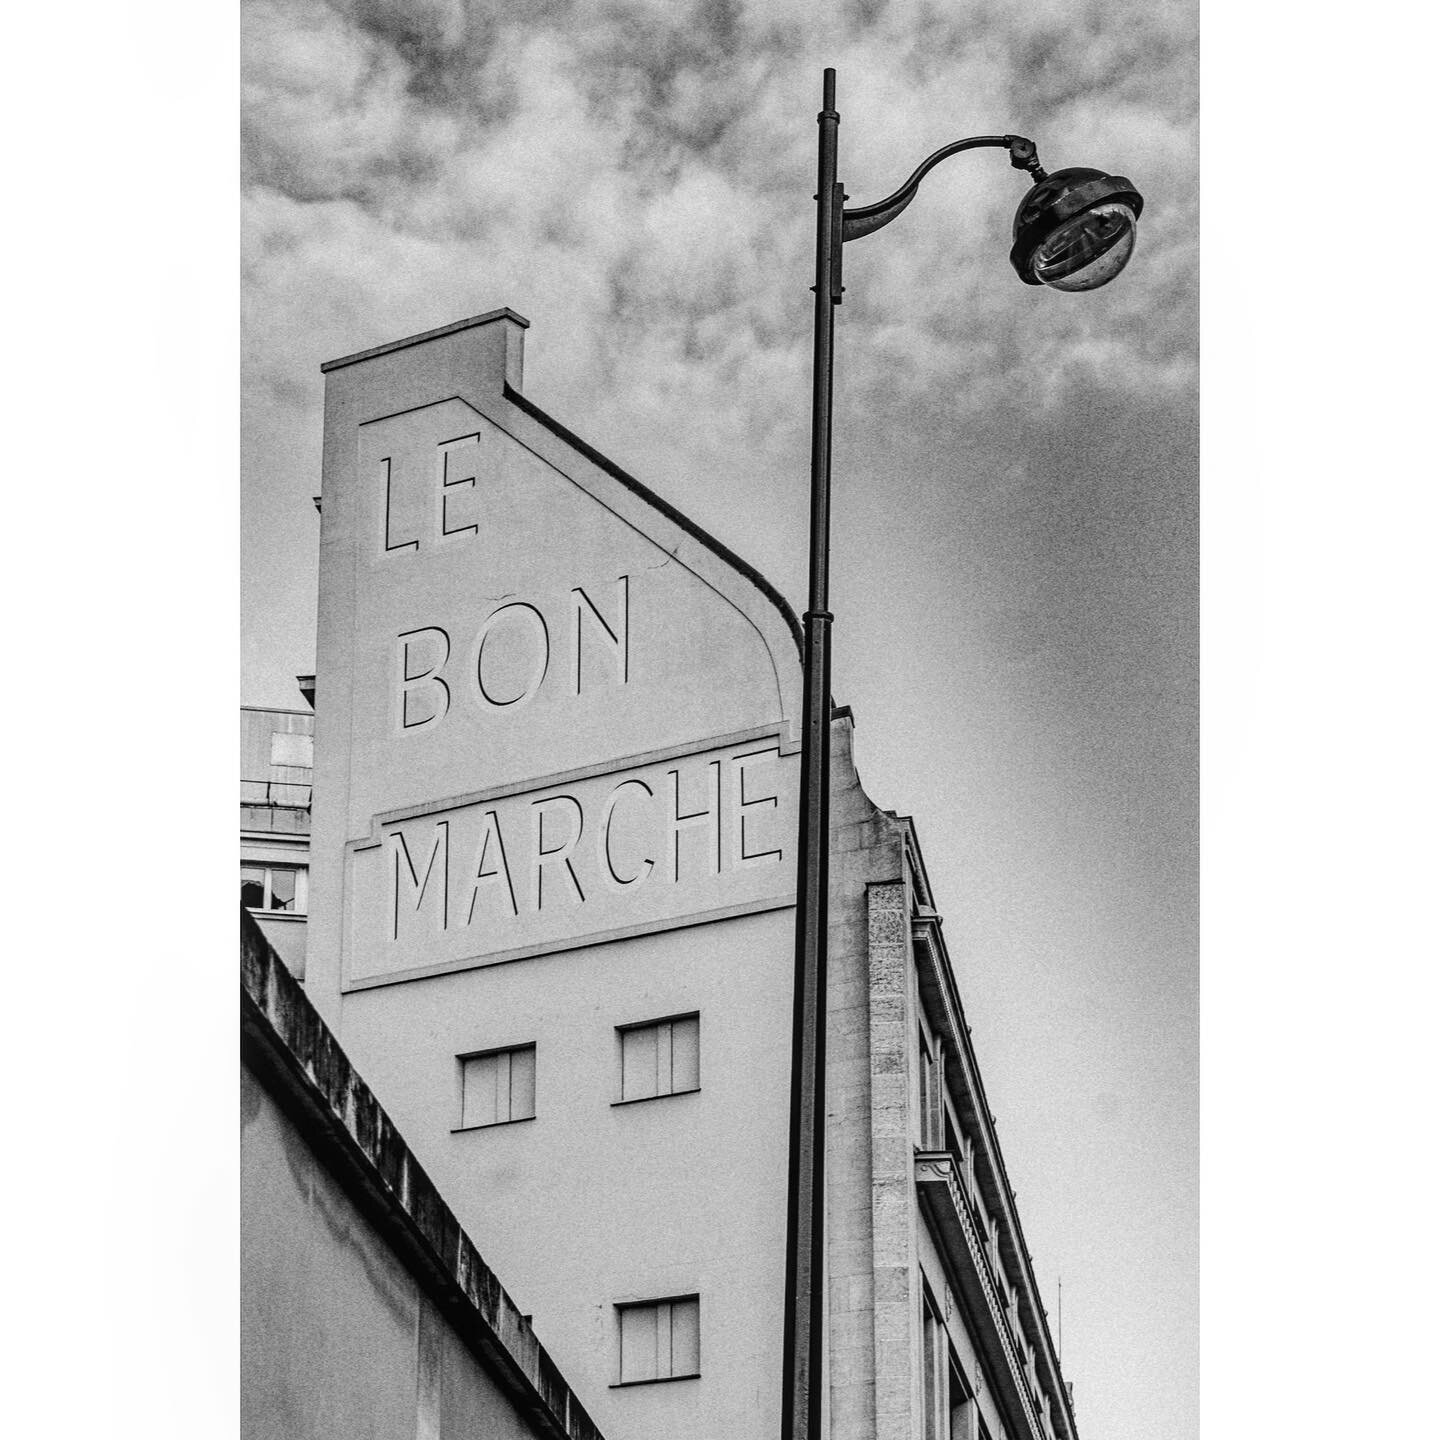 le bon marche
.
.
.

#street #magnumphotos #life_is_street #thinkverylittle #reframedmag #eyeshotmag #life_is_scene #capturestreets #photocinematica #minimalzine #bw #bnw #blackandwhite #bnw_demand #streetbw
#bnw_artstyle #paris #france